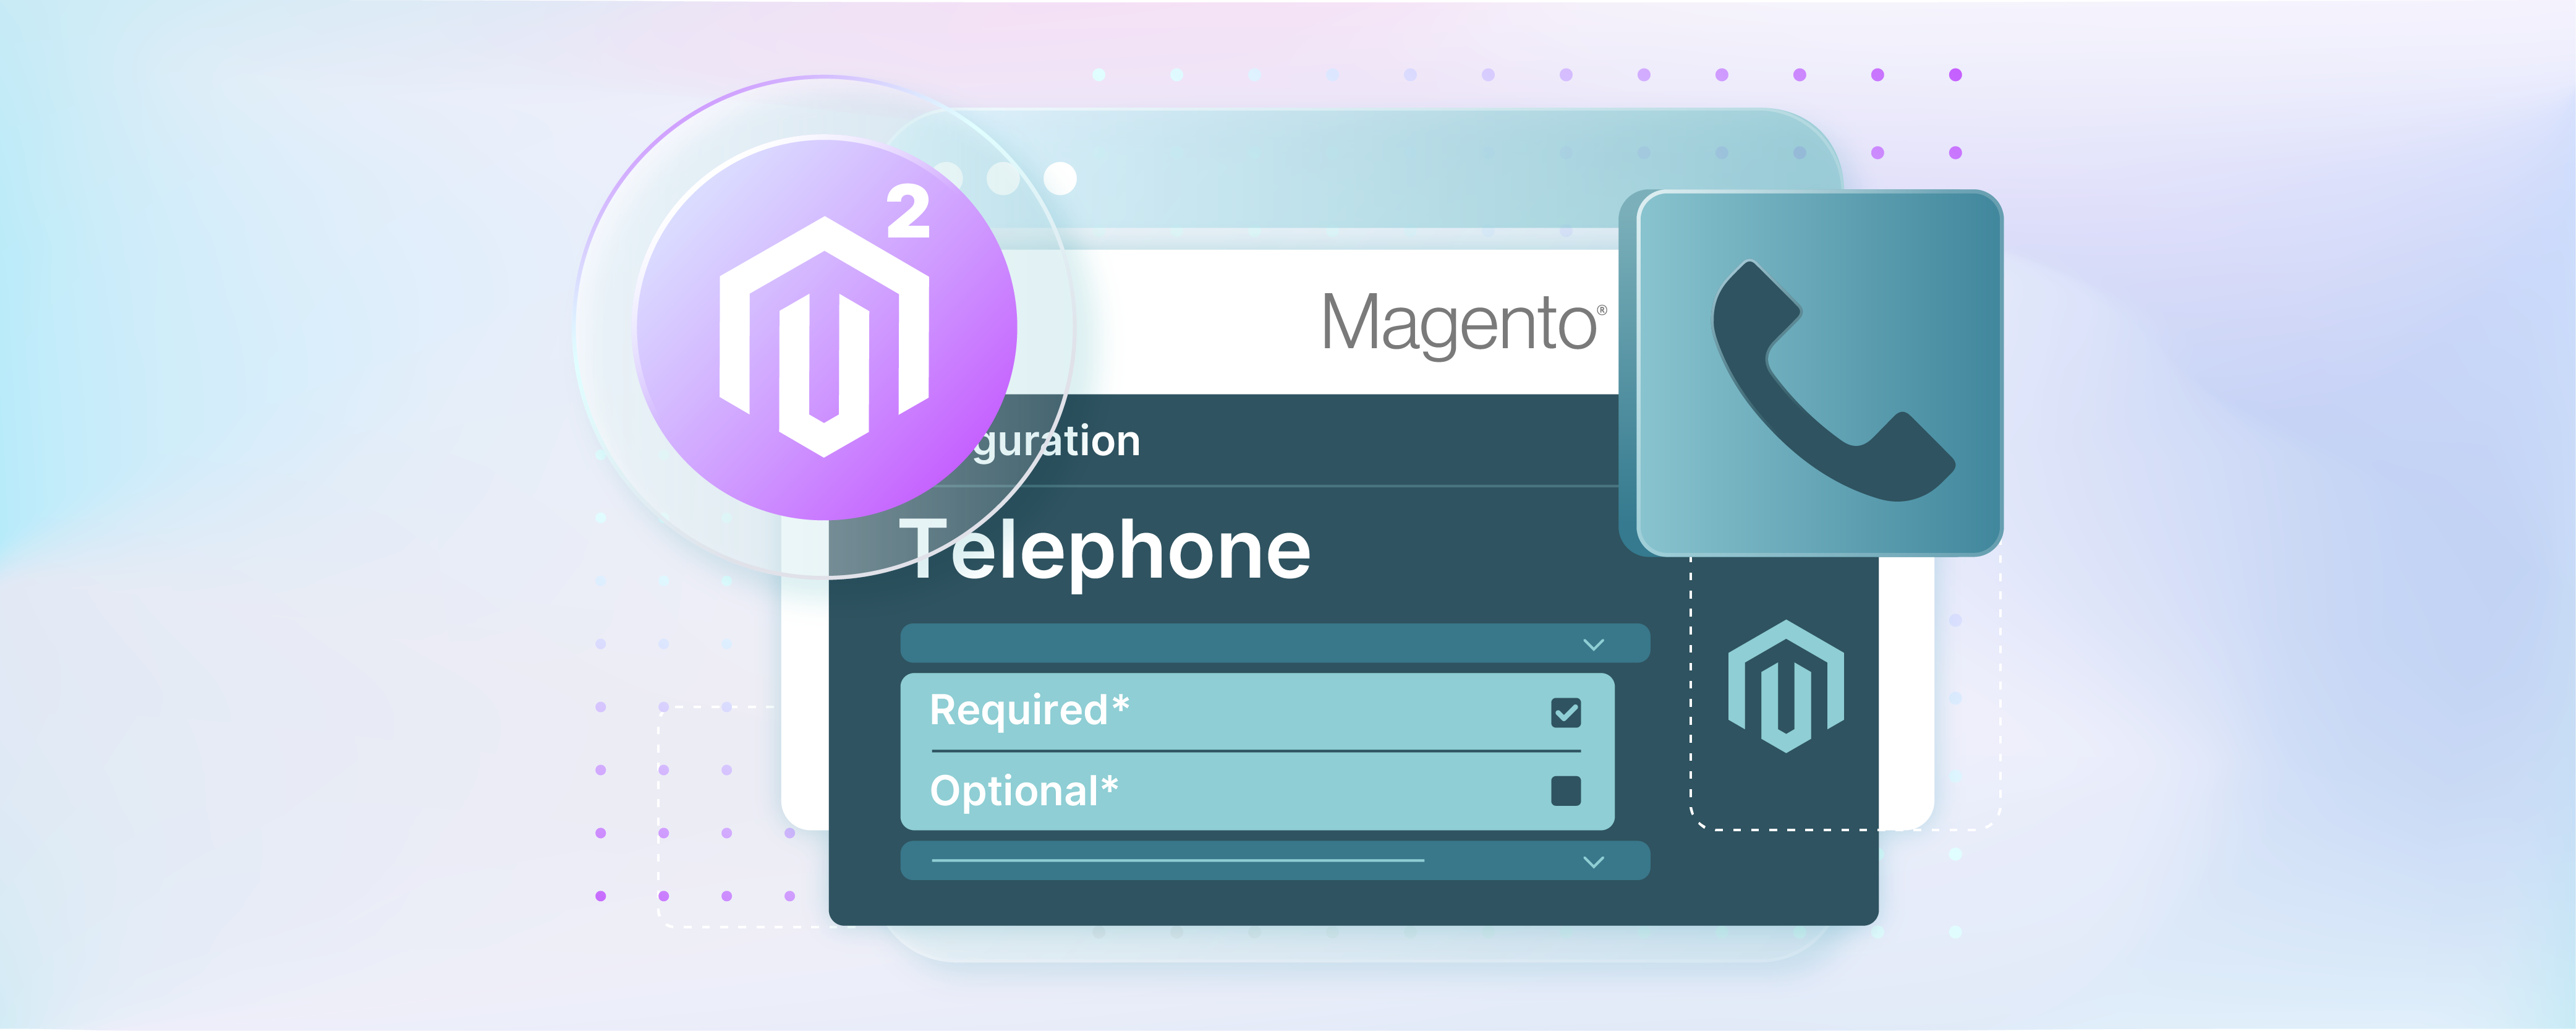 Magento 2 Telephone Validation in Customer Registration